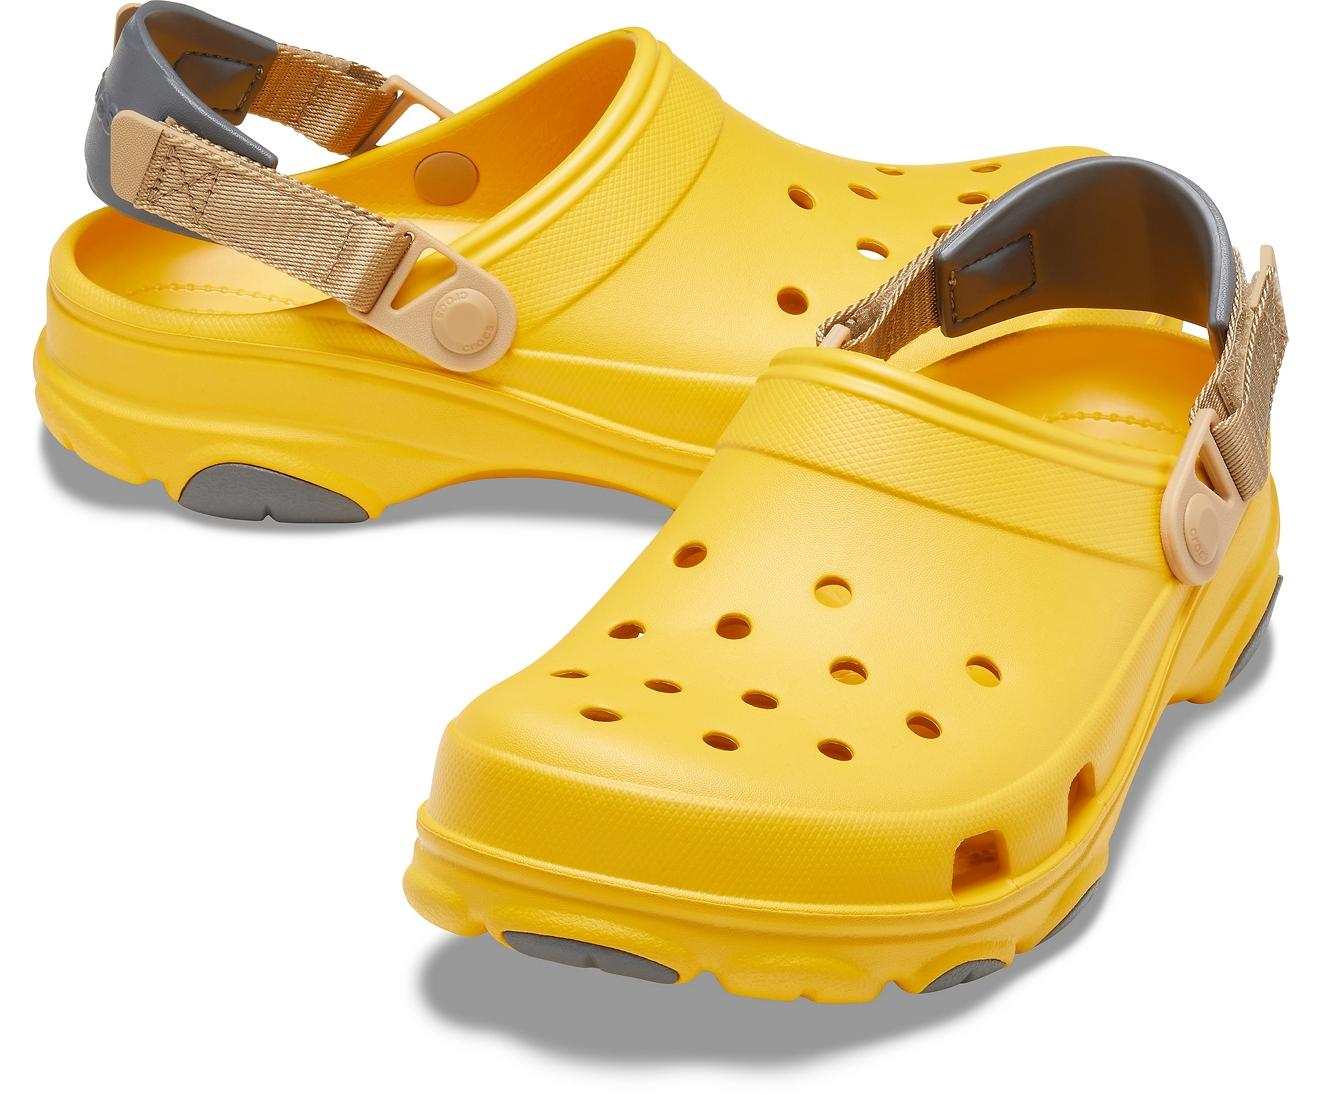 crocs yellow clogs